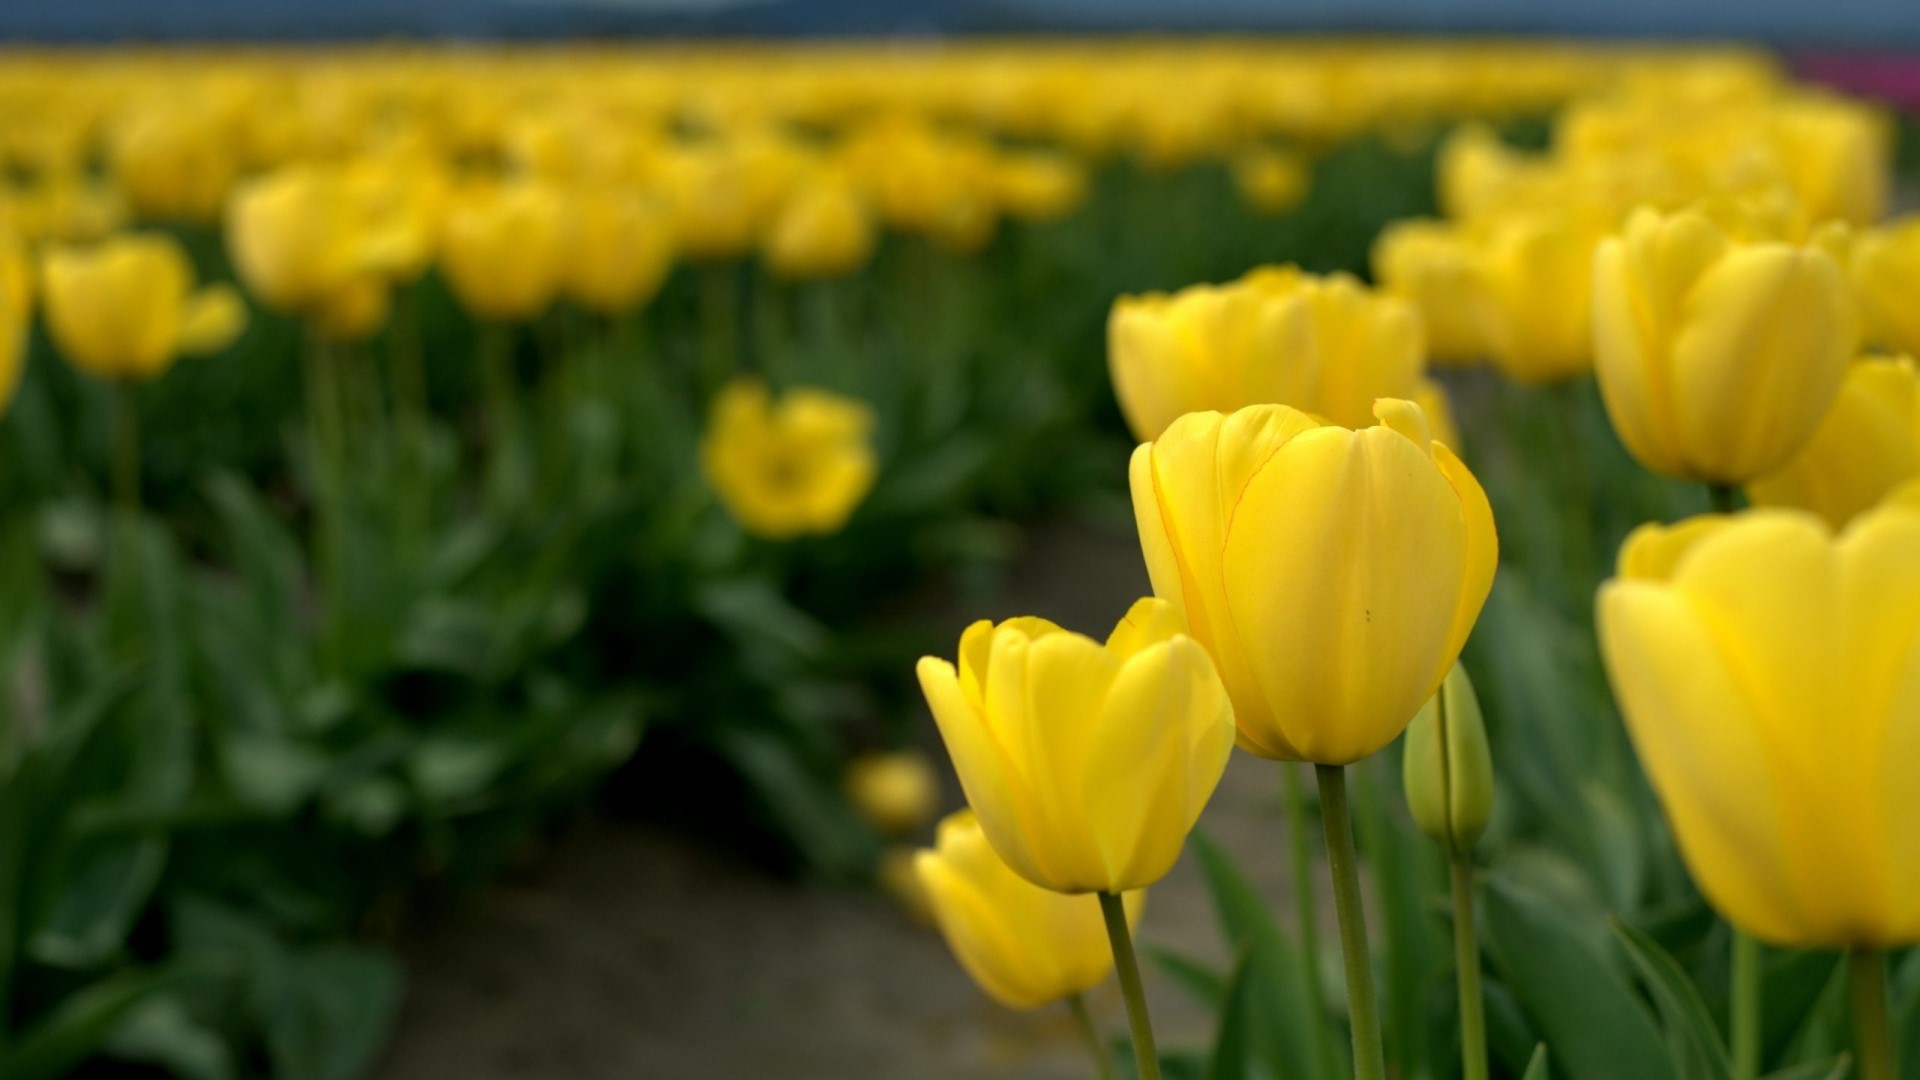 A field of yellow flowers in bloom - Tulip